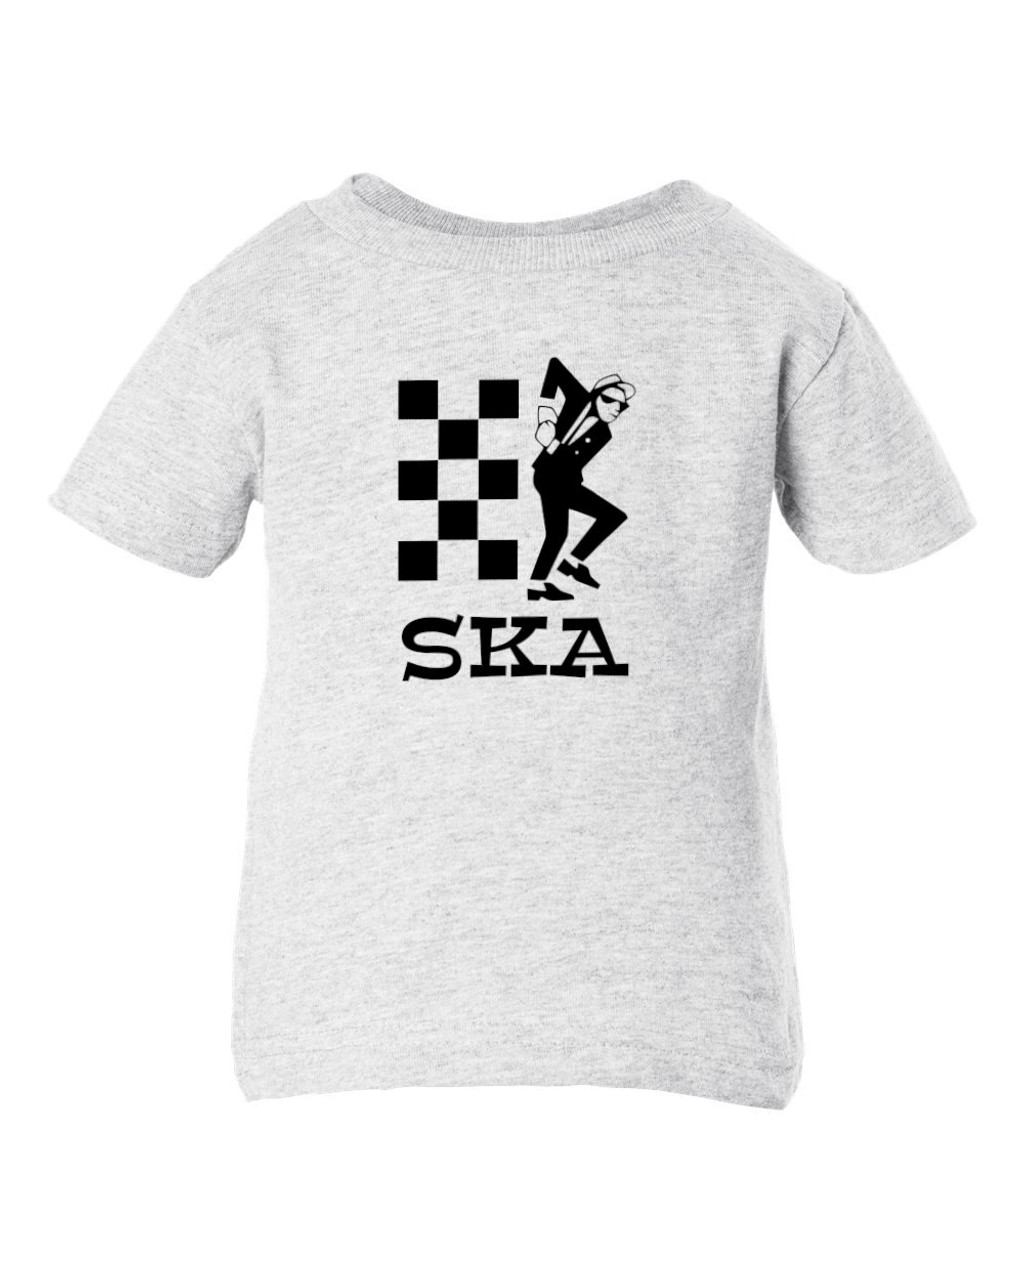 SKA Punk Rudeboy 2 Tone Ash Baby Toddler Cotton Child Ash T-Shirt